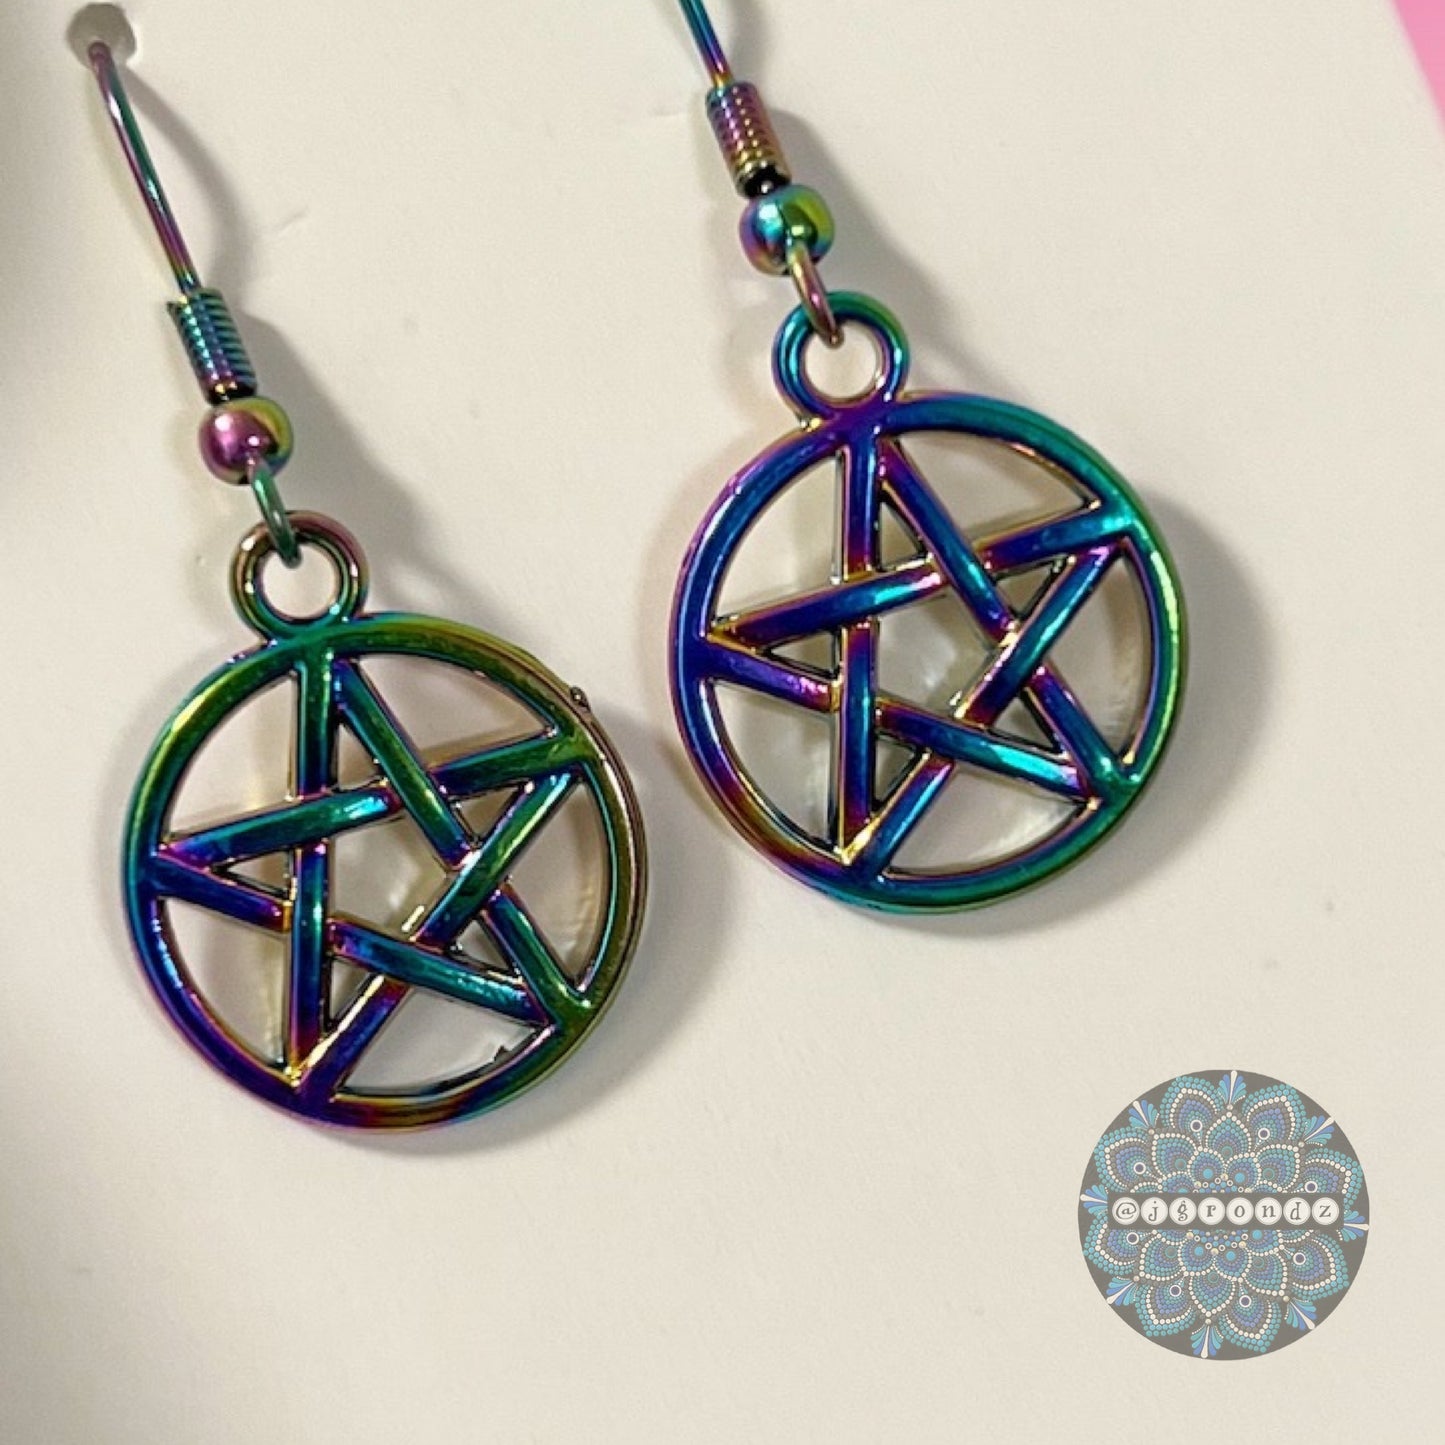 Rainbow Pentagram Earrings With Stainless Steel Fish Hook Ear Wire for Halloween